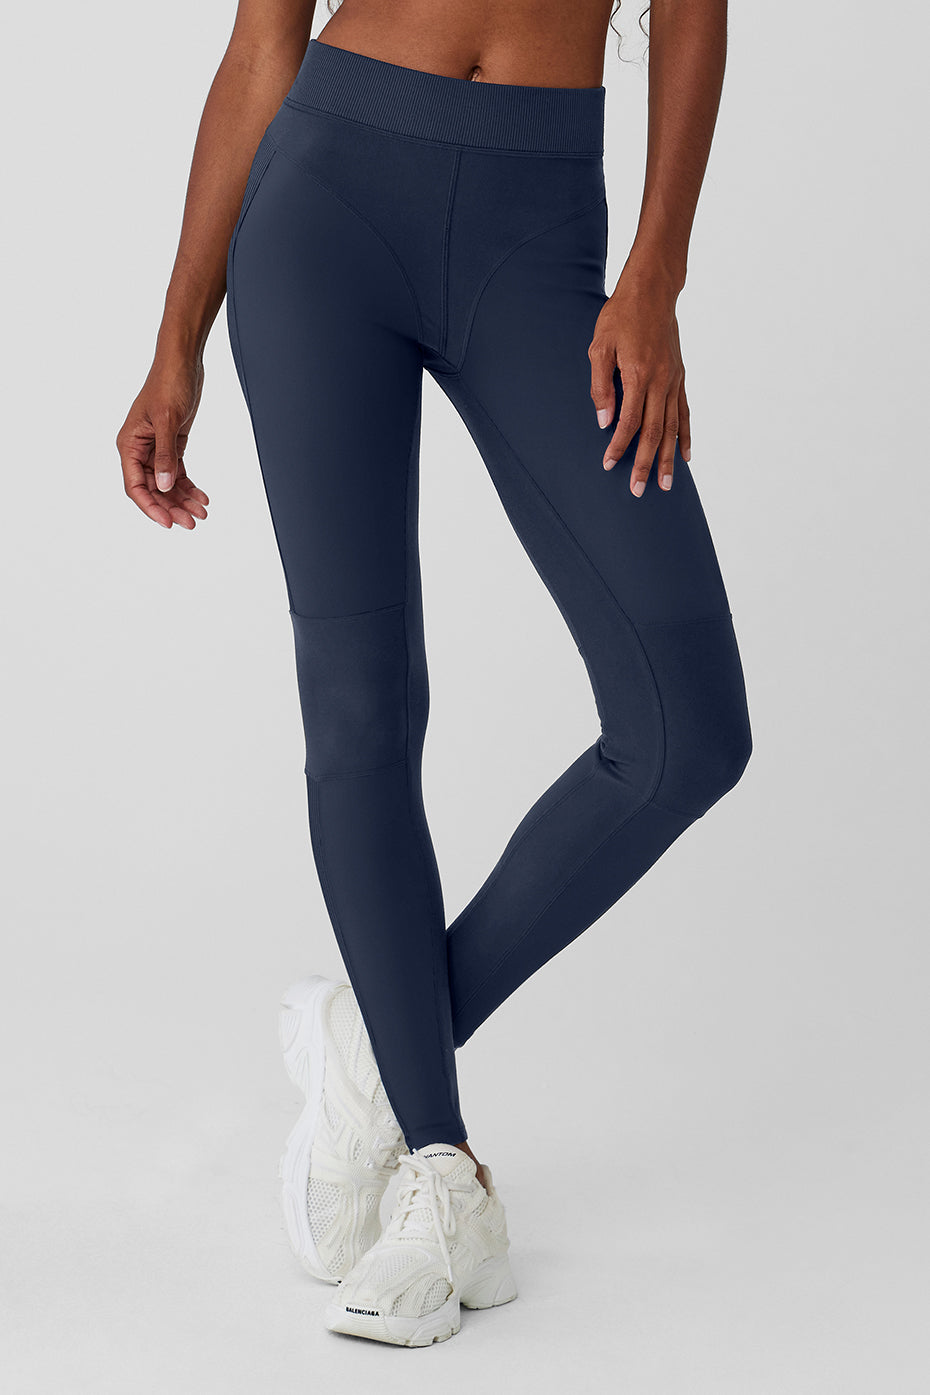 ALO Yoga, Pants & Jumpsuits, Highwaist Alosoft Flow Legging Size Xxs